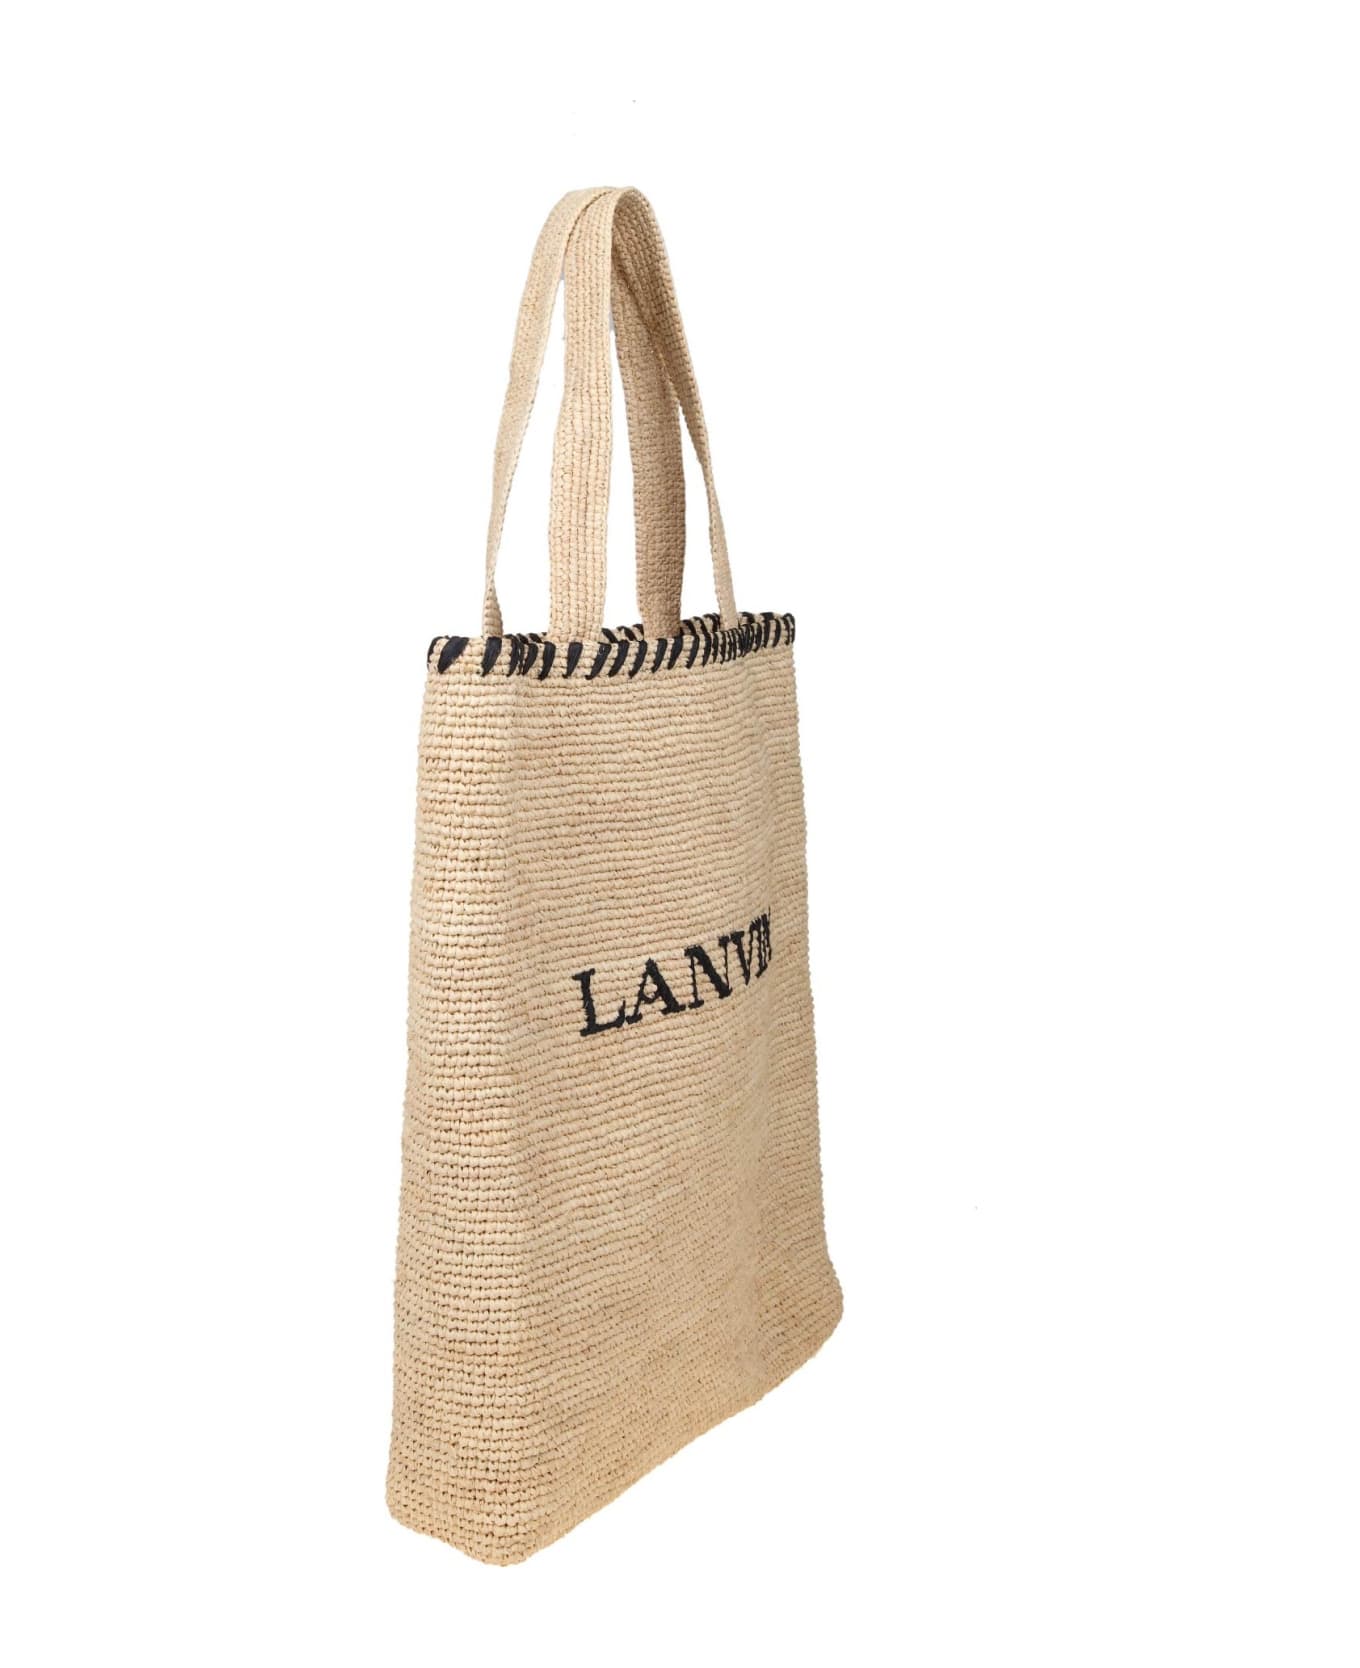 Lanvin Tote Bag In Raffia With Embroidery - Natural / Black